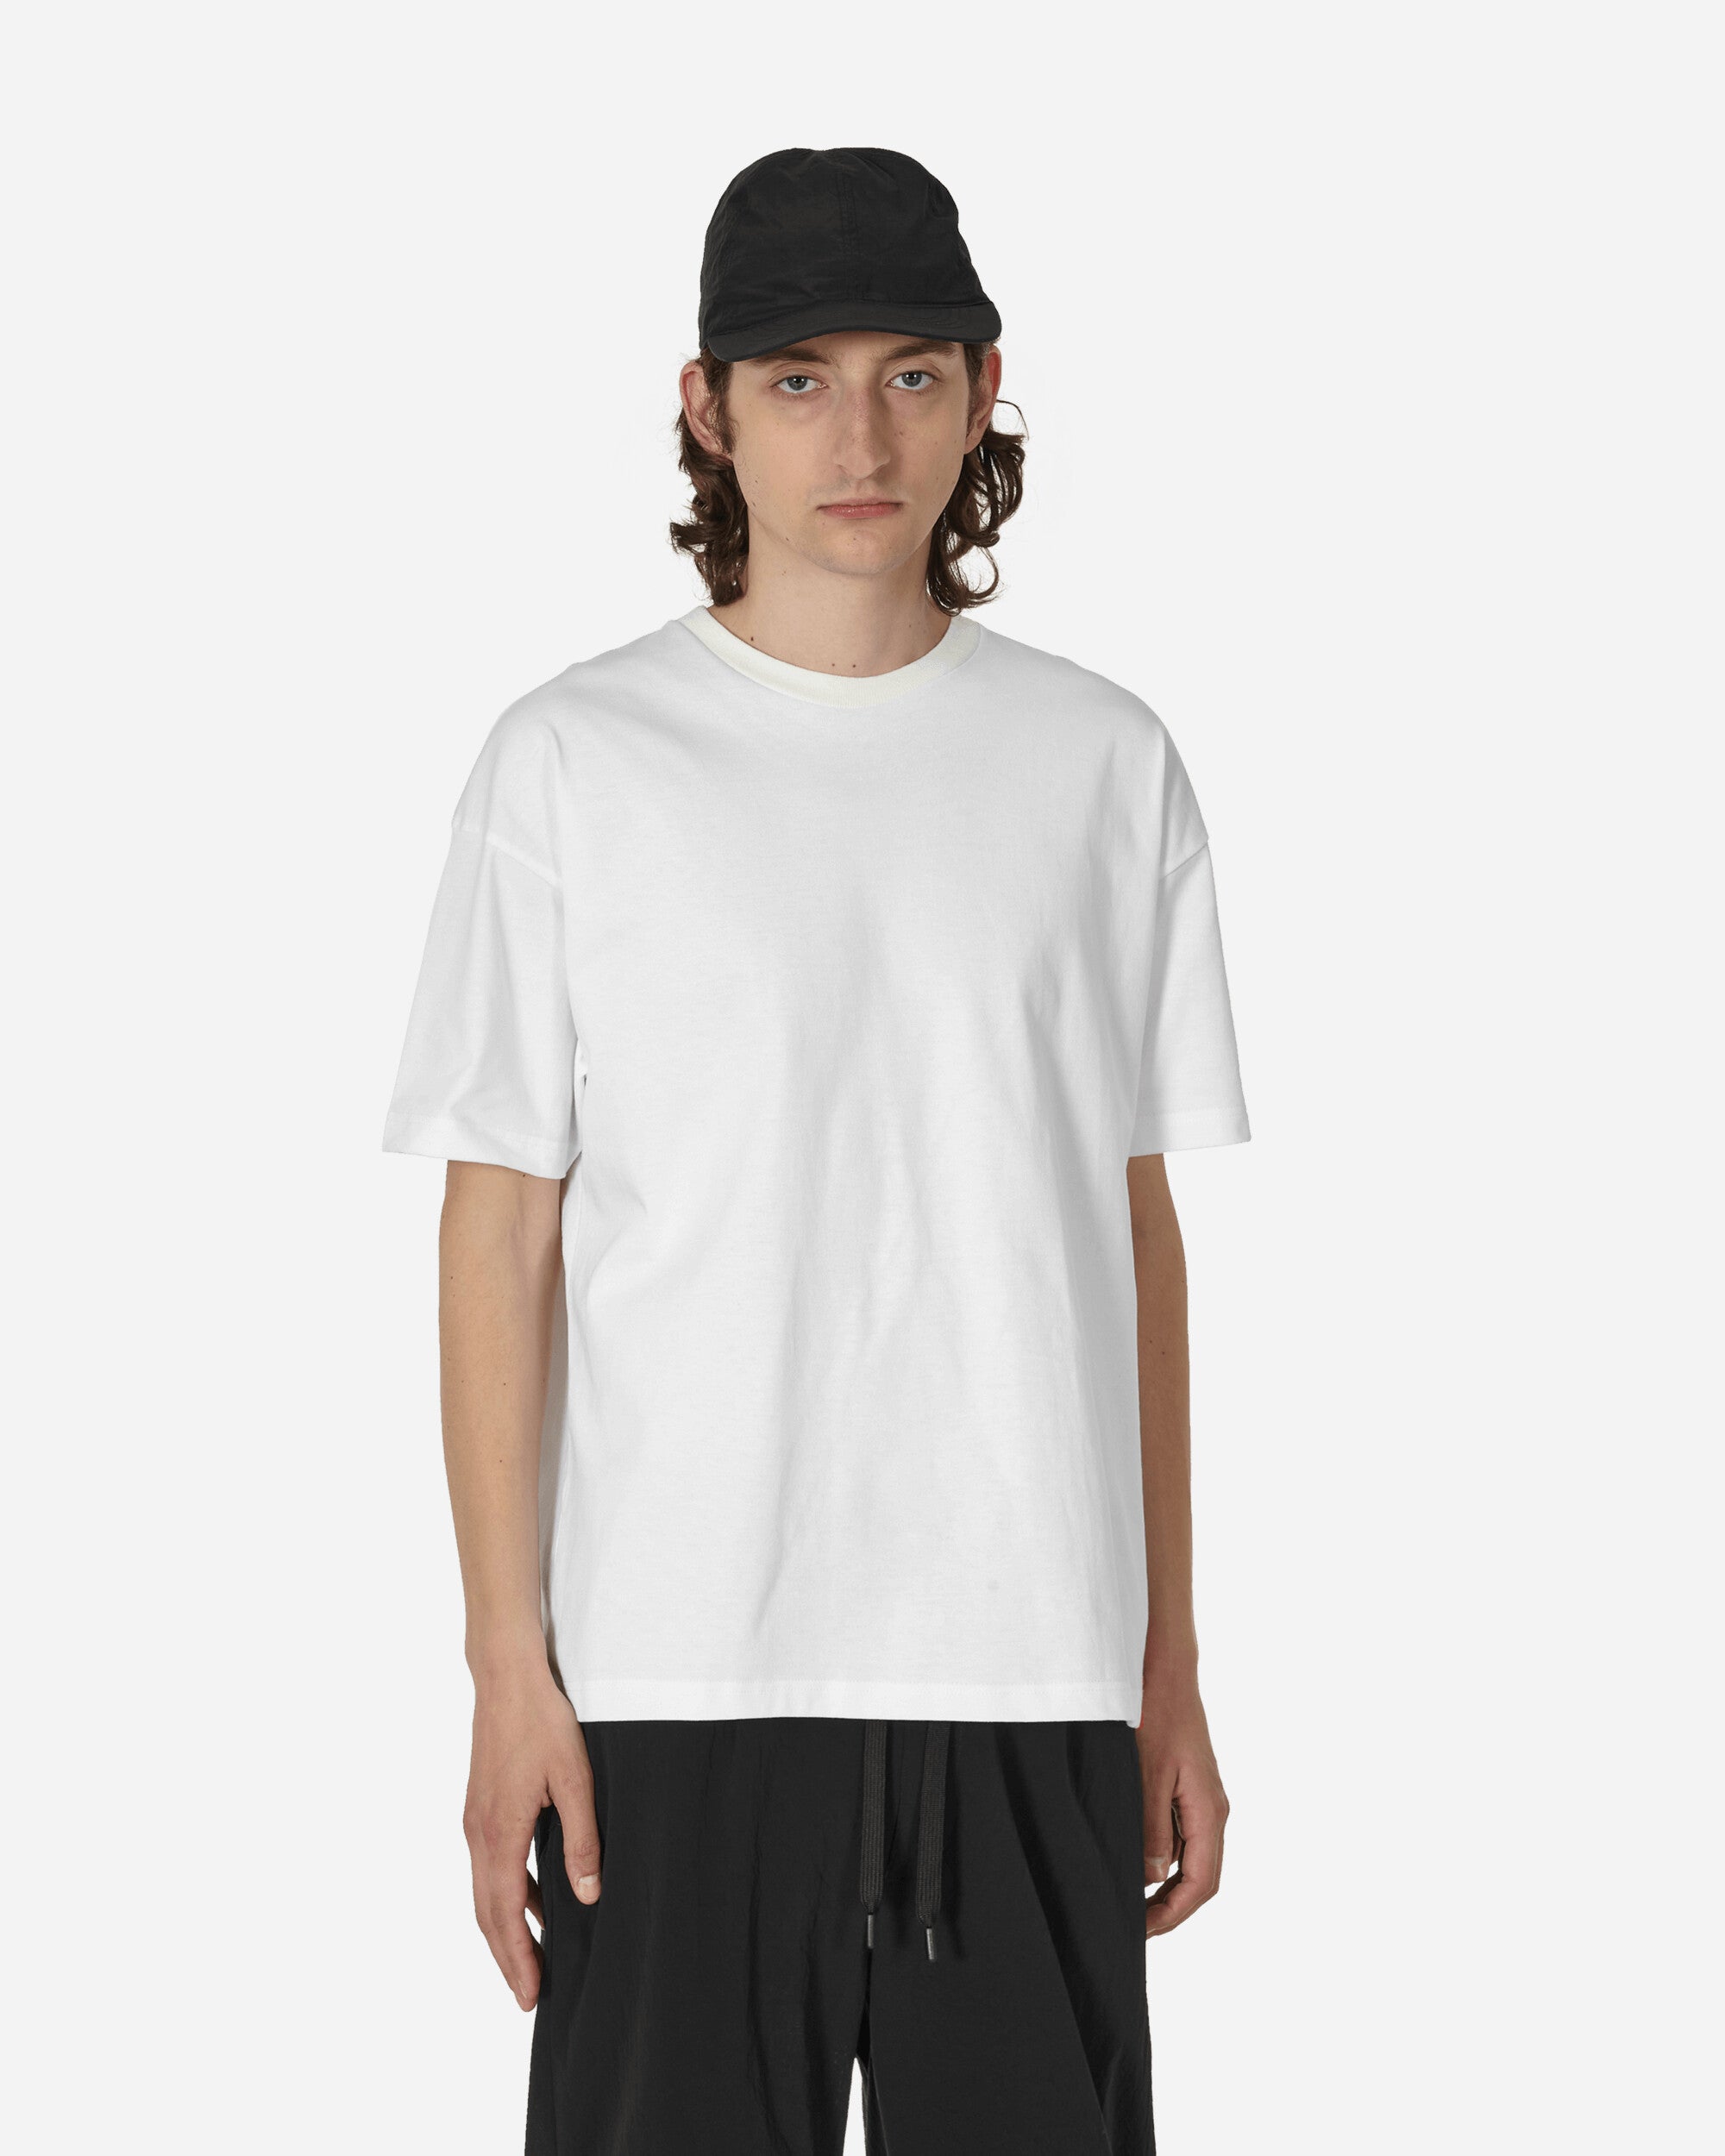 Phingerin Heavy Soft Tee White T-Shirts Shortsleeve PD-231-CS-111 A